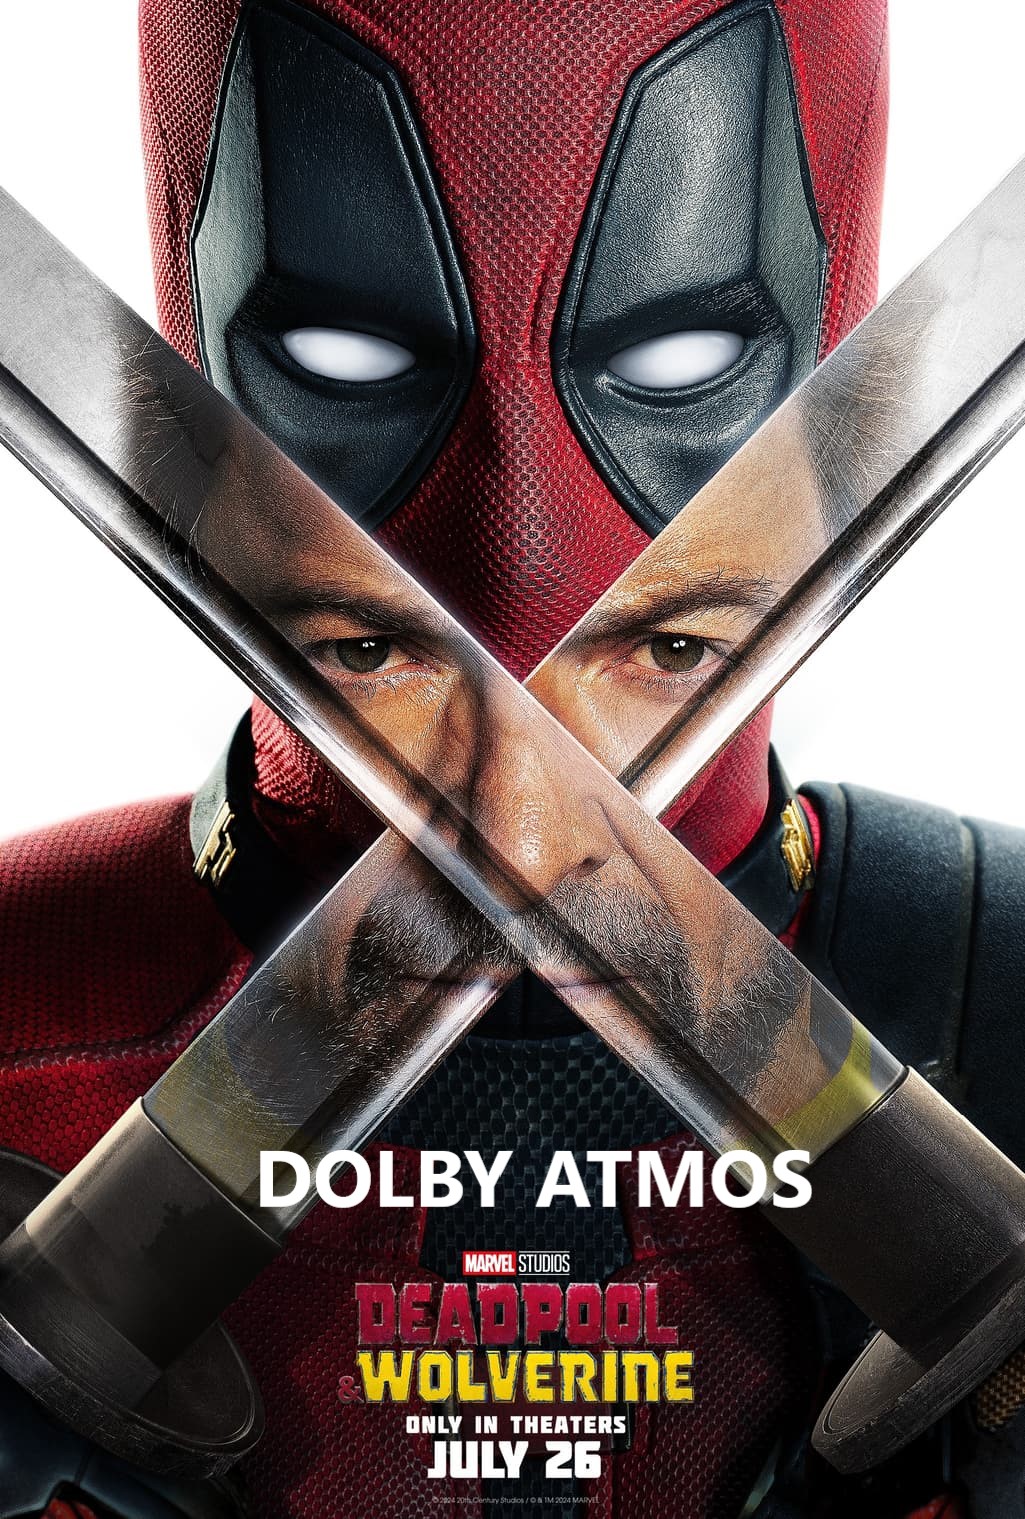 Deadpool & Wolverine DOLBY ATMOS